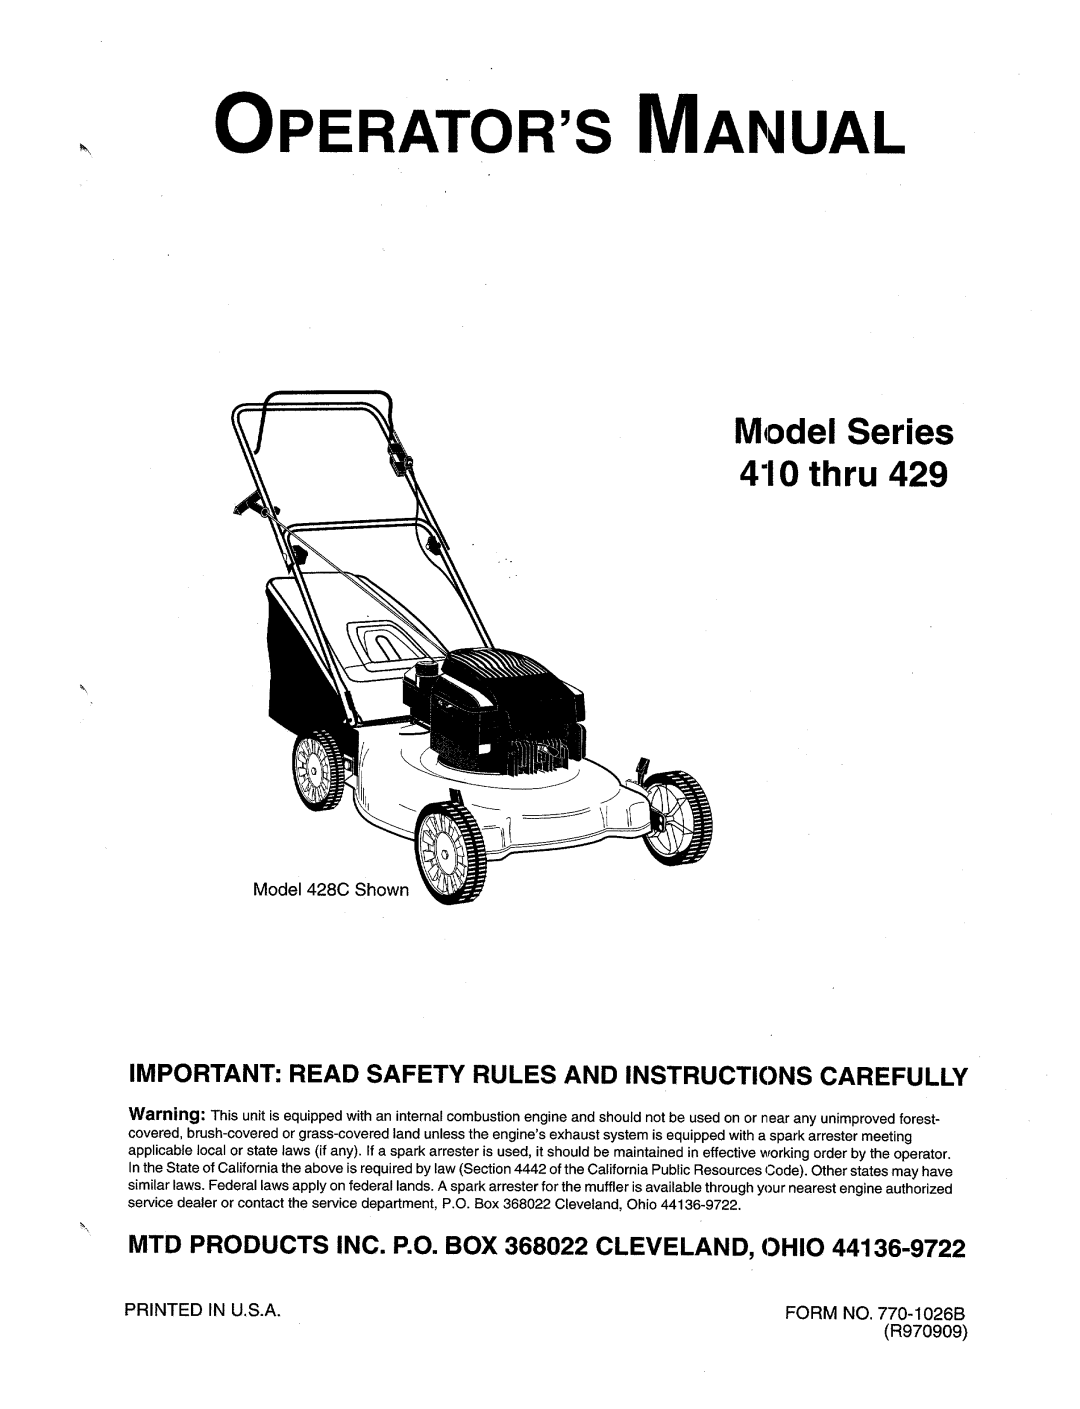 MTD Series 410 through 429 manual 